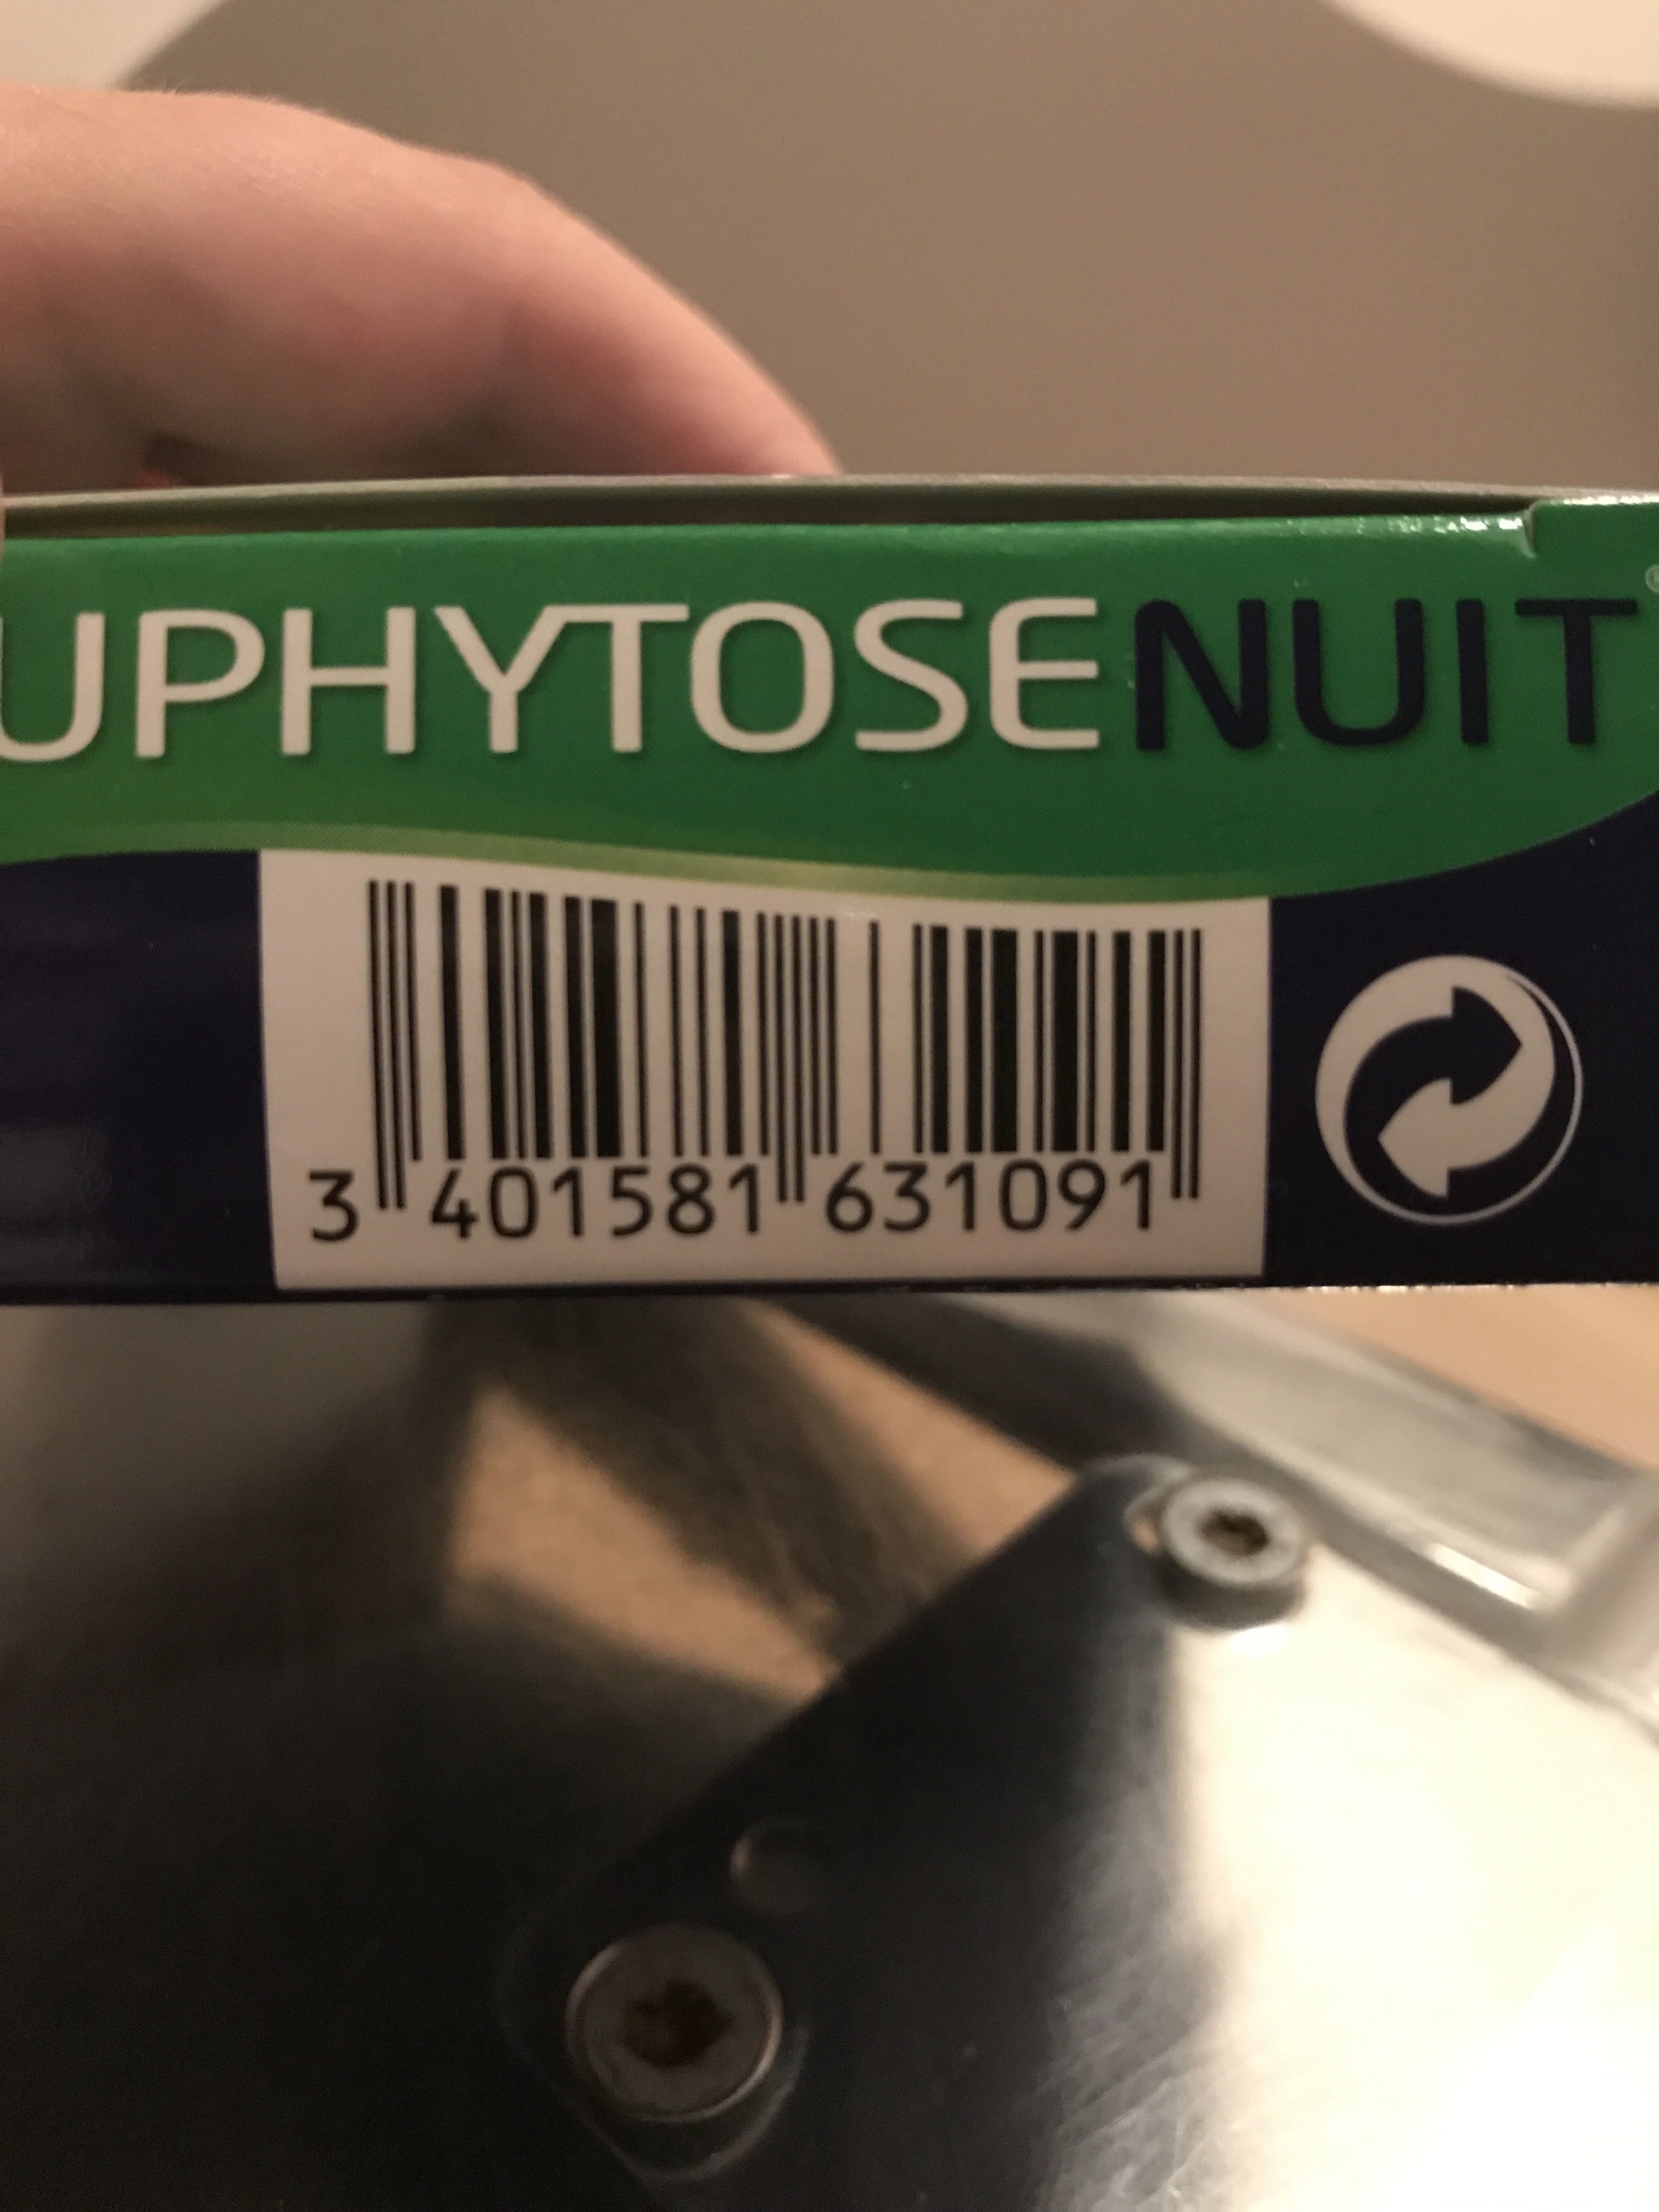 EuphytoseNuit - Product - fr